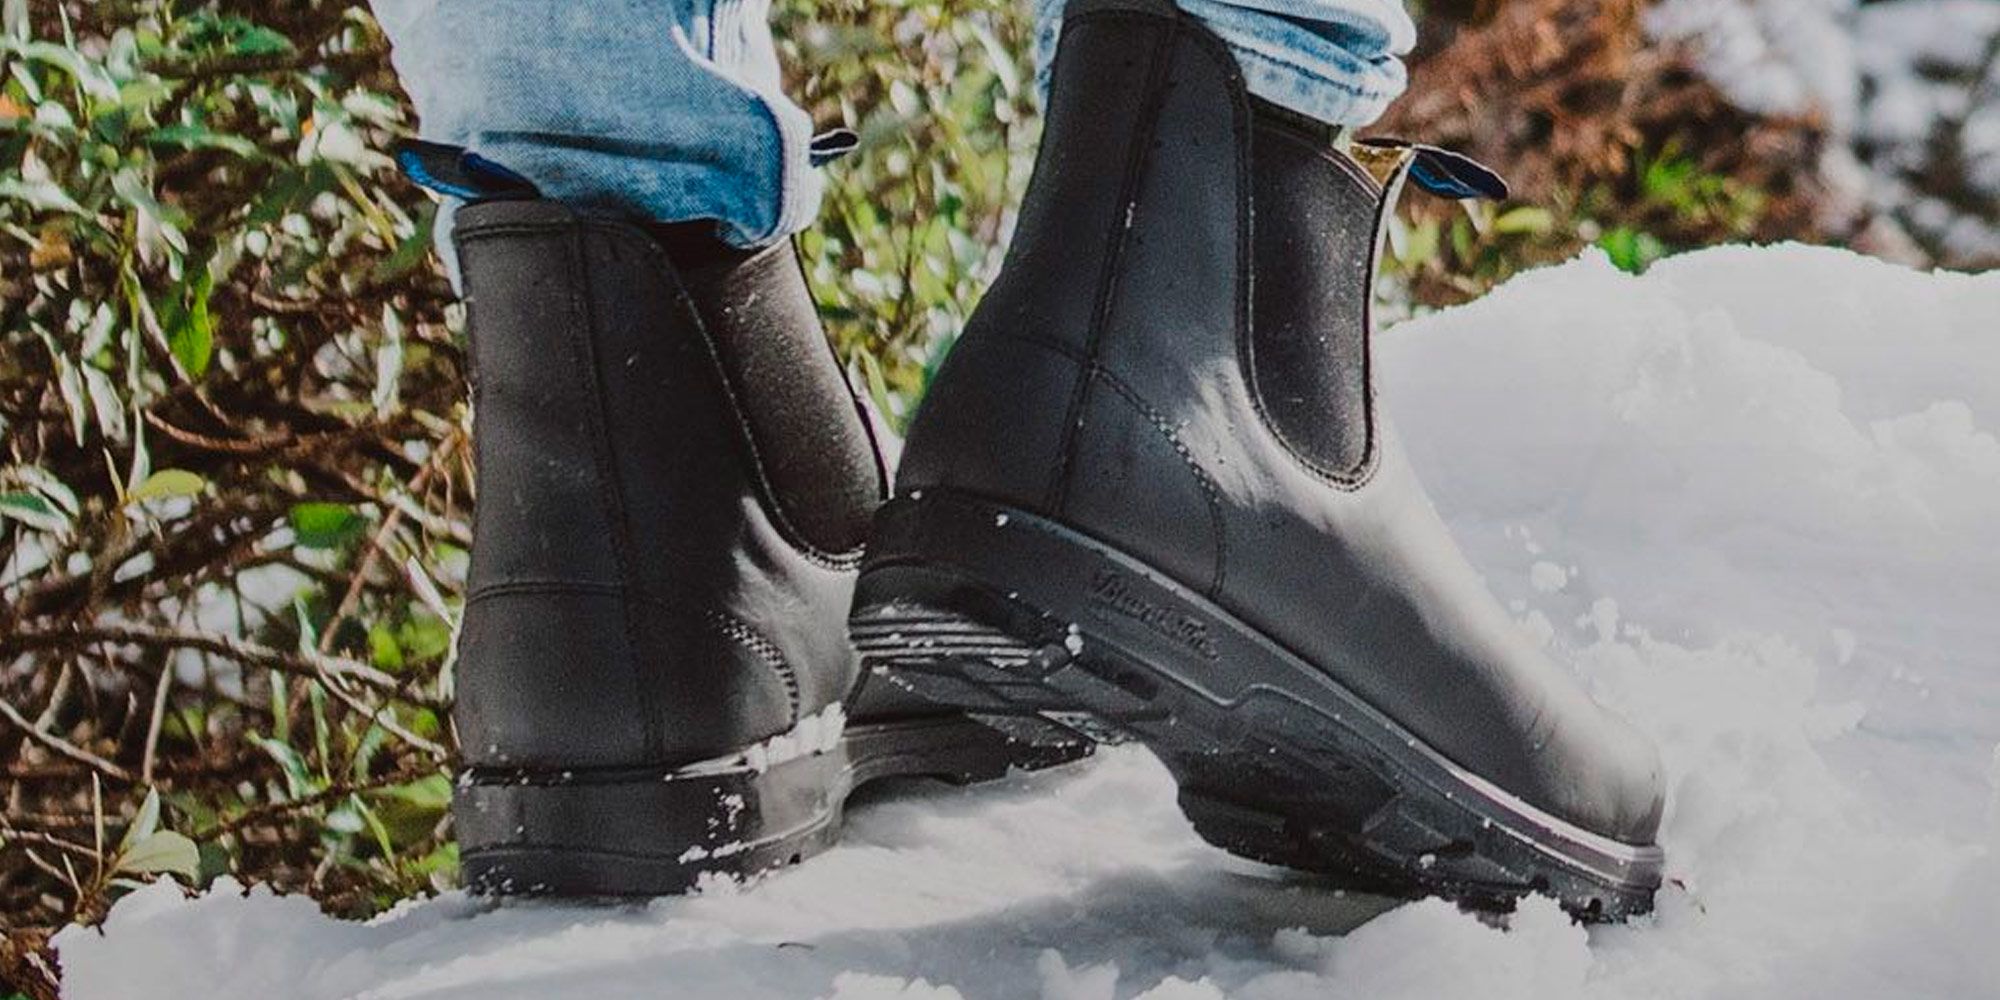 194s rain boots